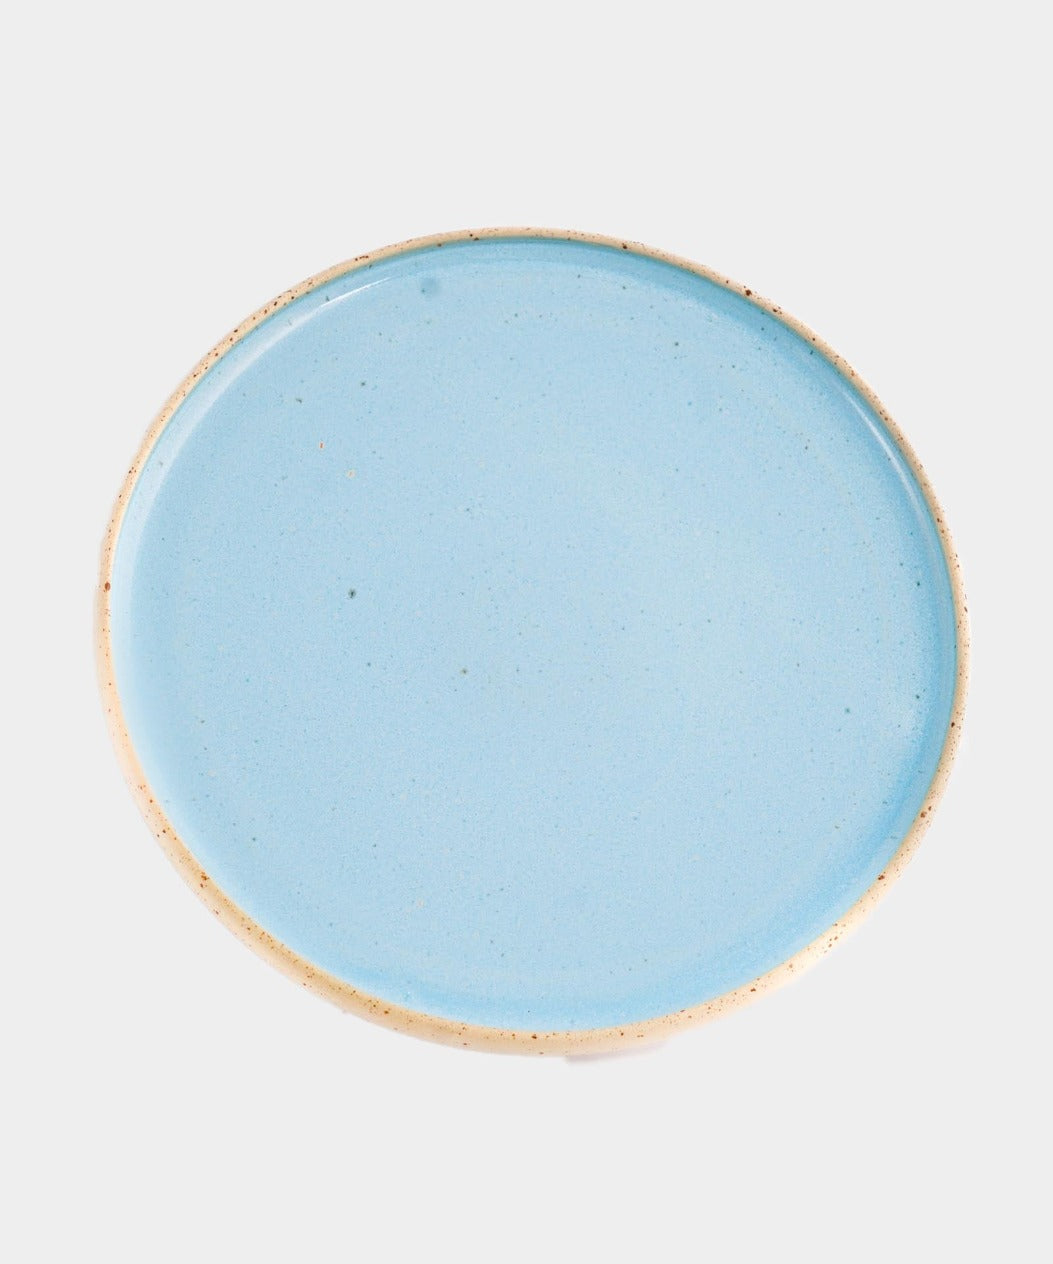 Håndlavet Keramik middagstallerken | SKY by Vang | Kerama